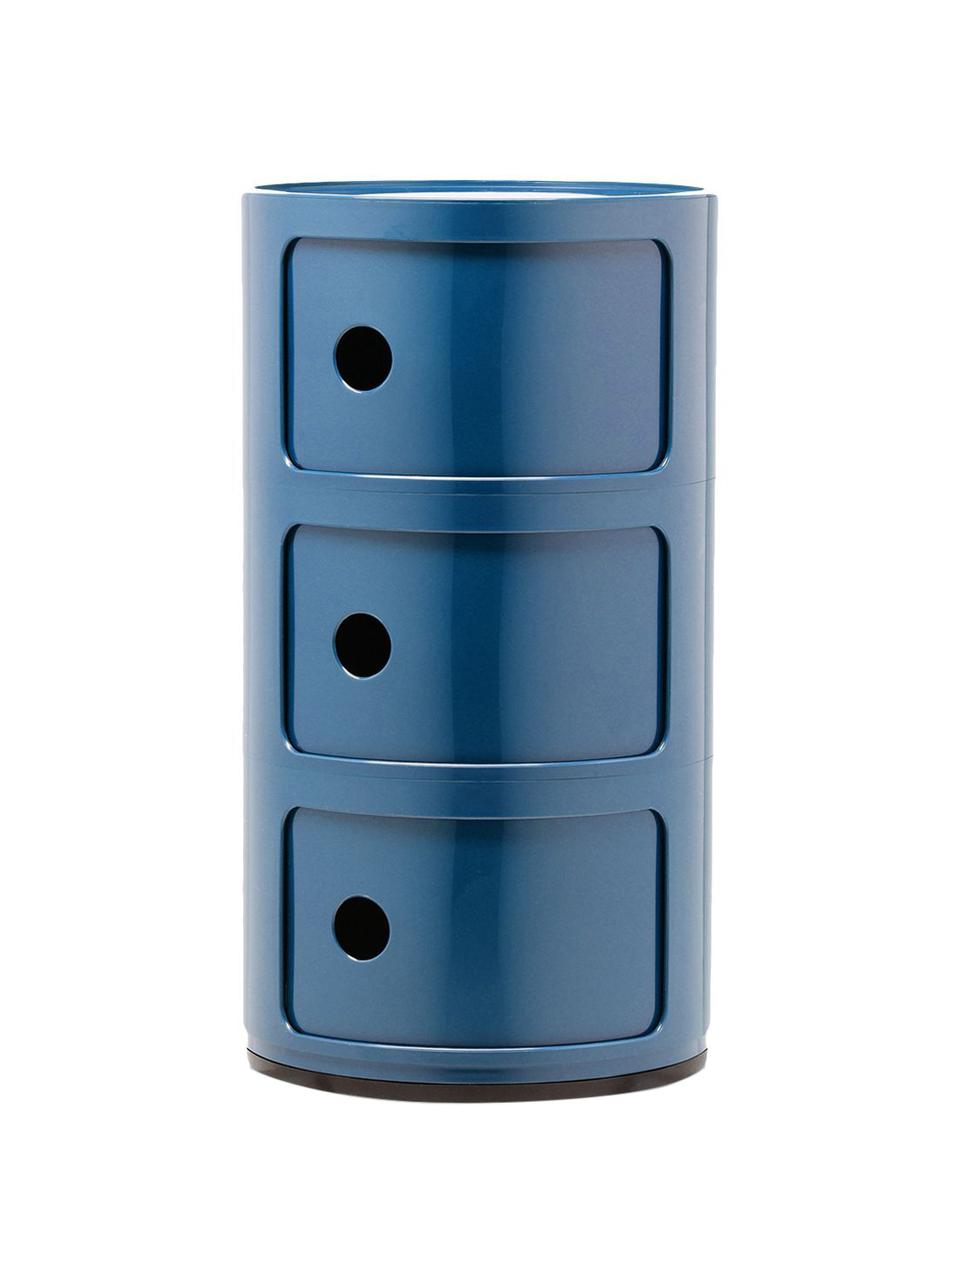 Contenitore di design blu con 3 cassetti Componibili, Plastica certificata Greenguard, Blu, Ø 32 x Alt. 59 cm